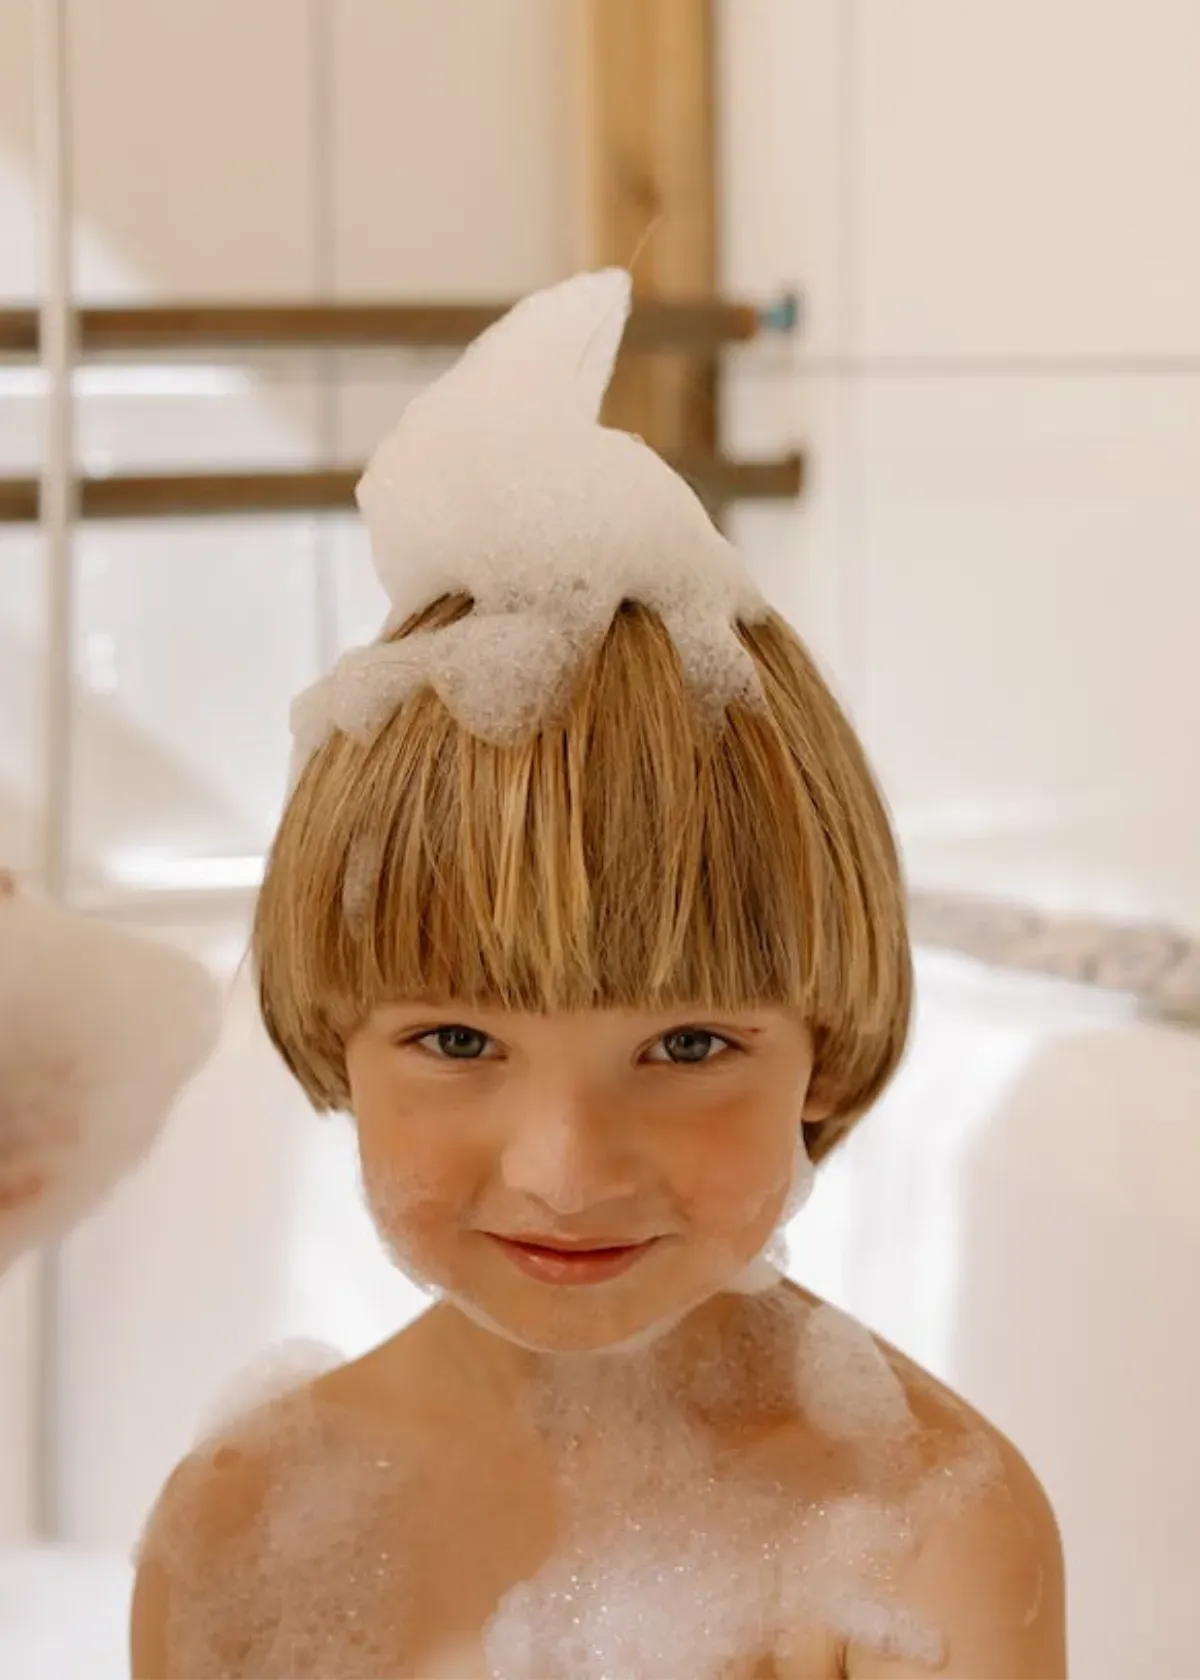 Best Shampoo for Kids